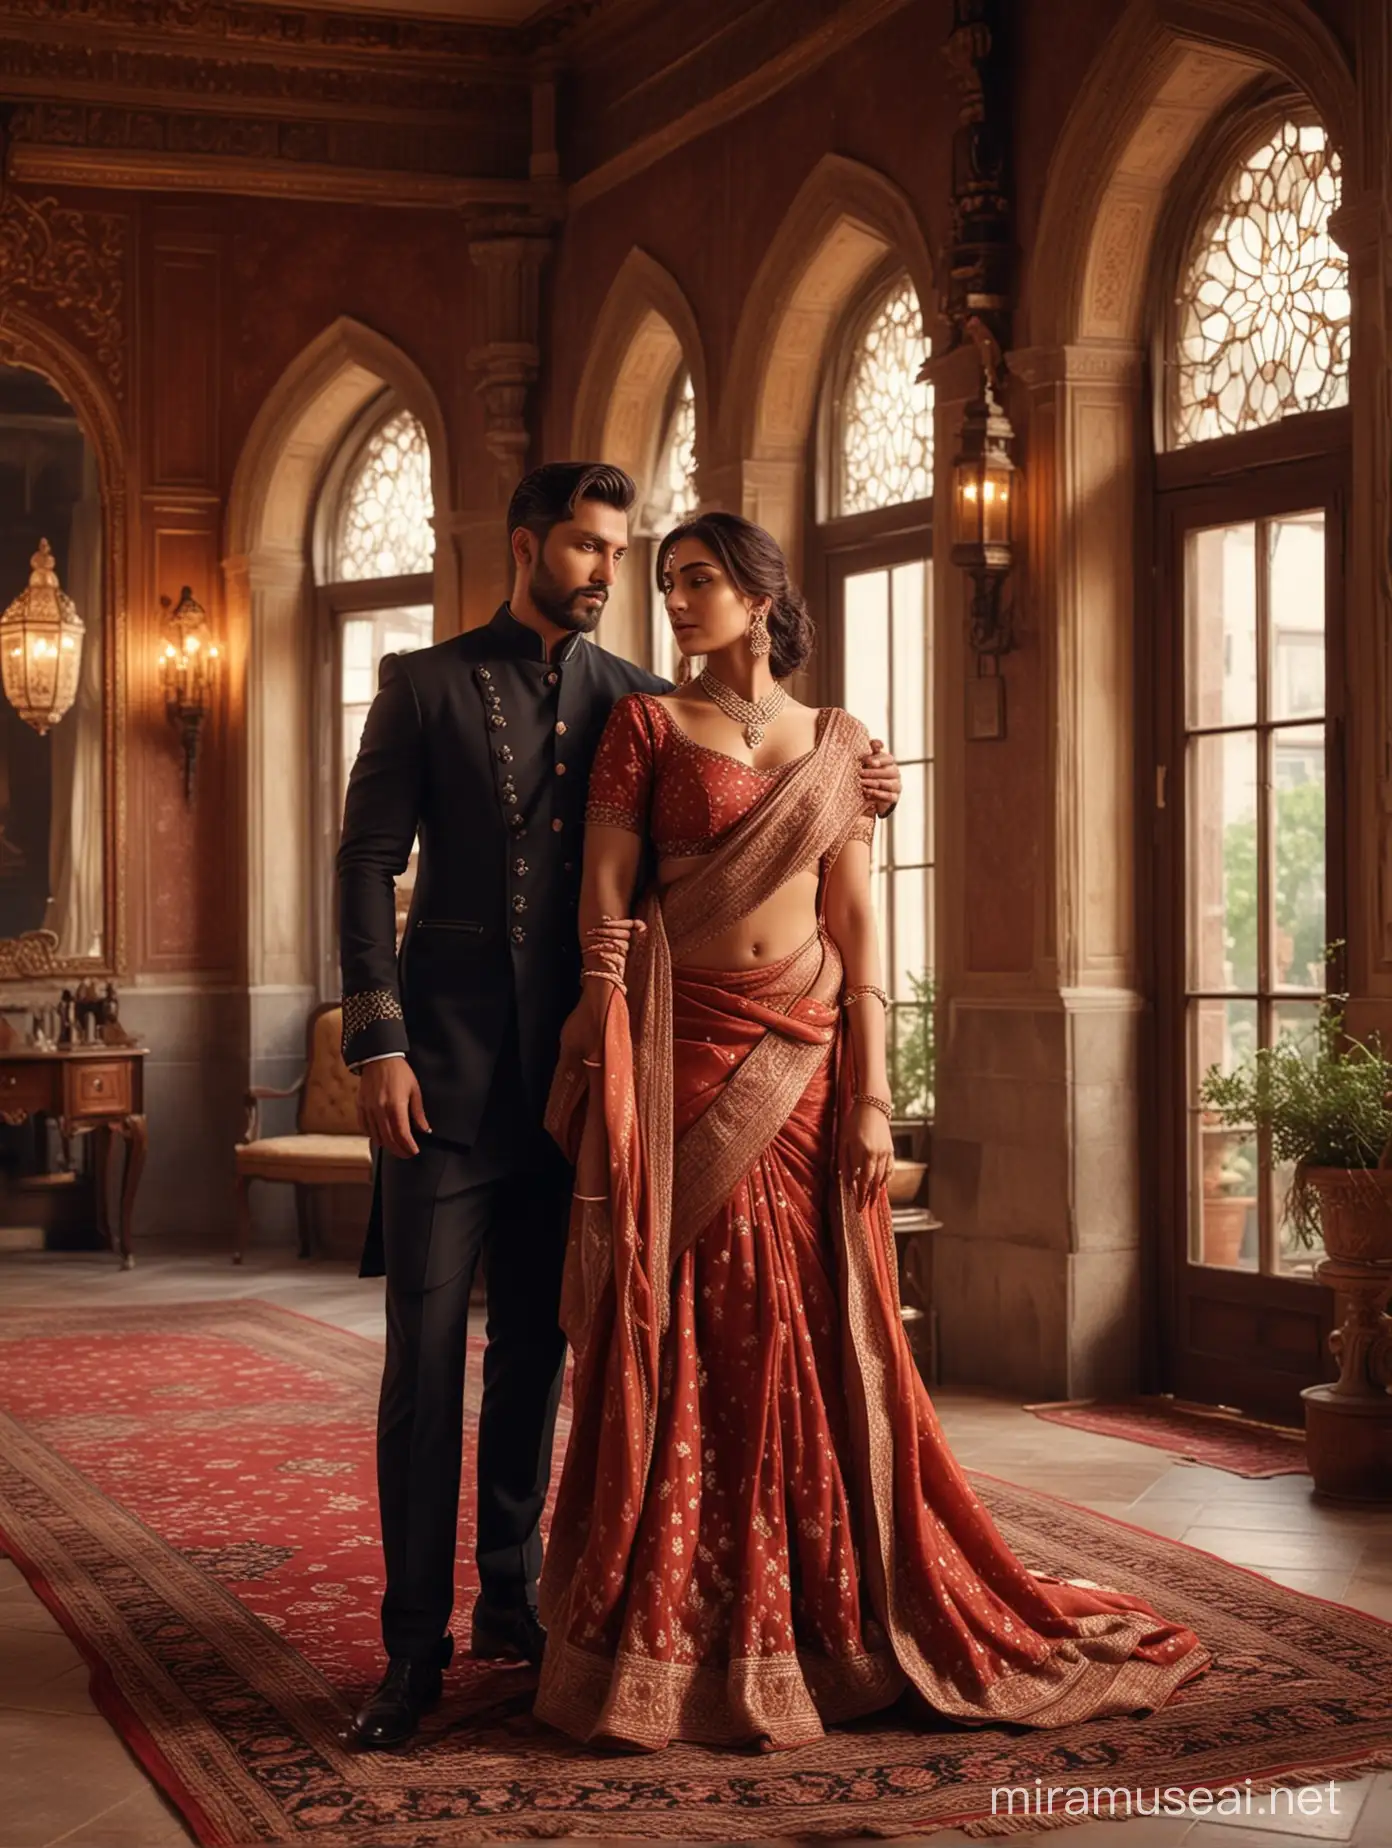 Romantic Encounter Elegant European Man and Beautiful Indian Woman in Vintage Palace Setting